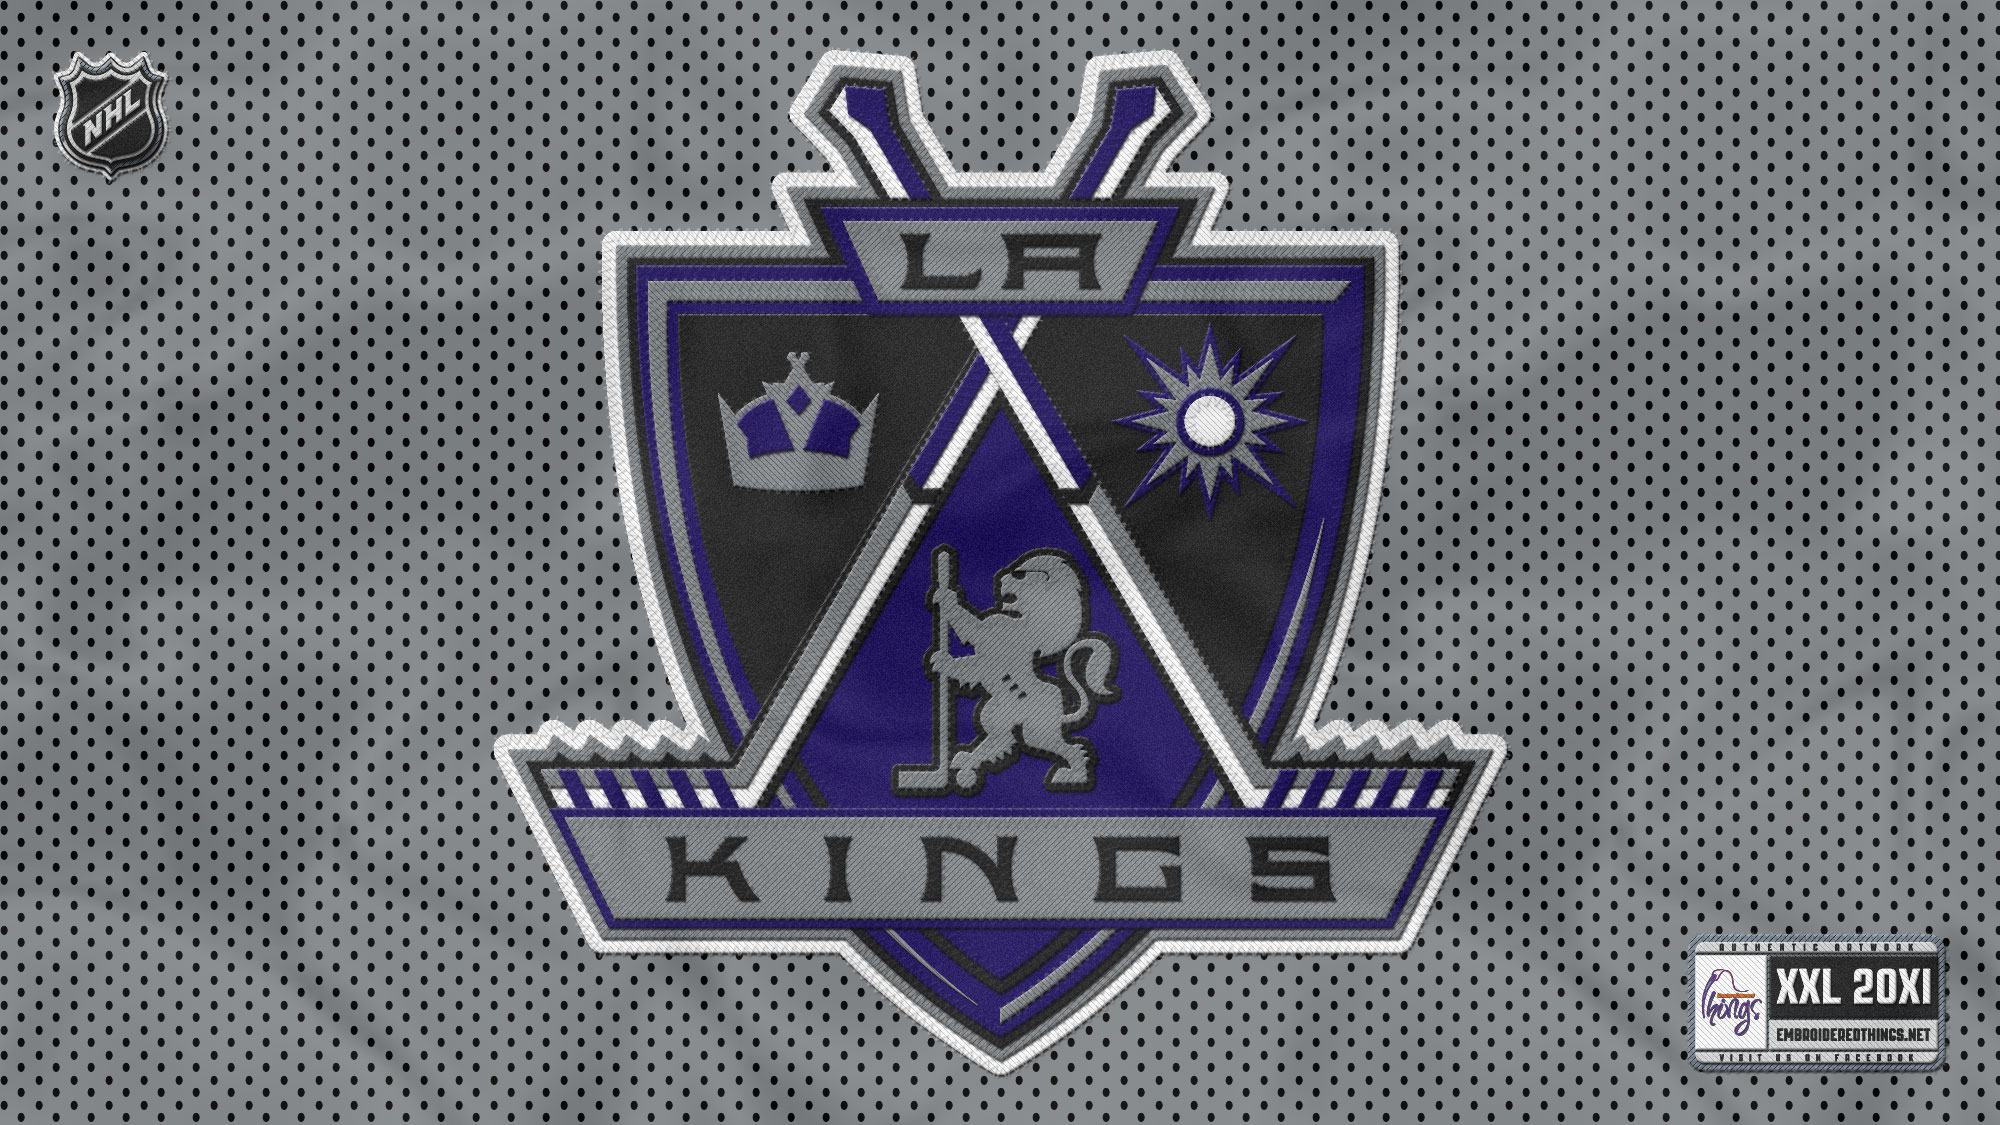  URL httpfunyloolcomid2los angeles kings logo old databasehtml